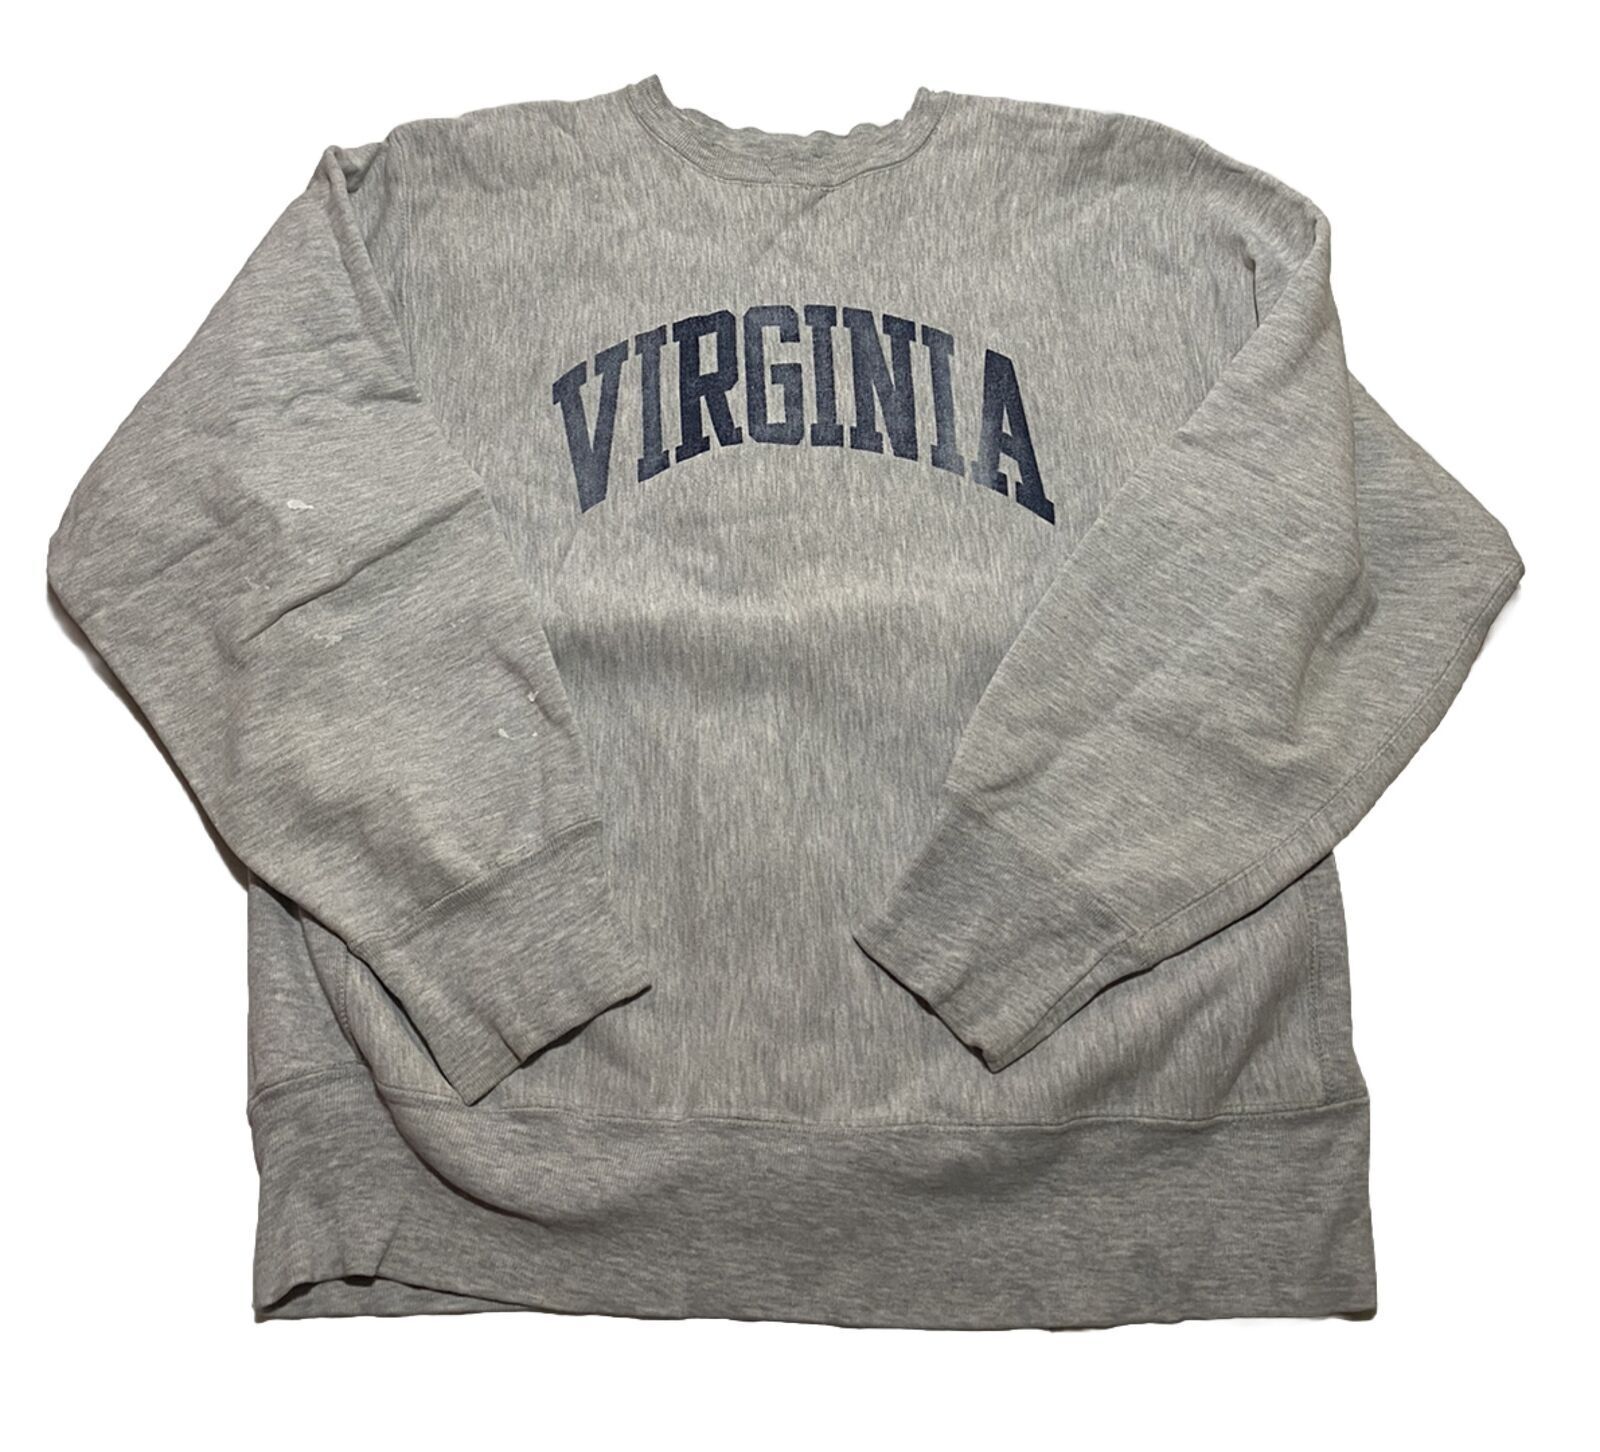 Vtg 80s CHAMPION Virginia Reverse Weave Sweatshirt Size XL Y6